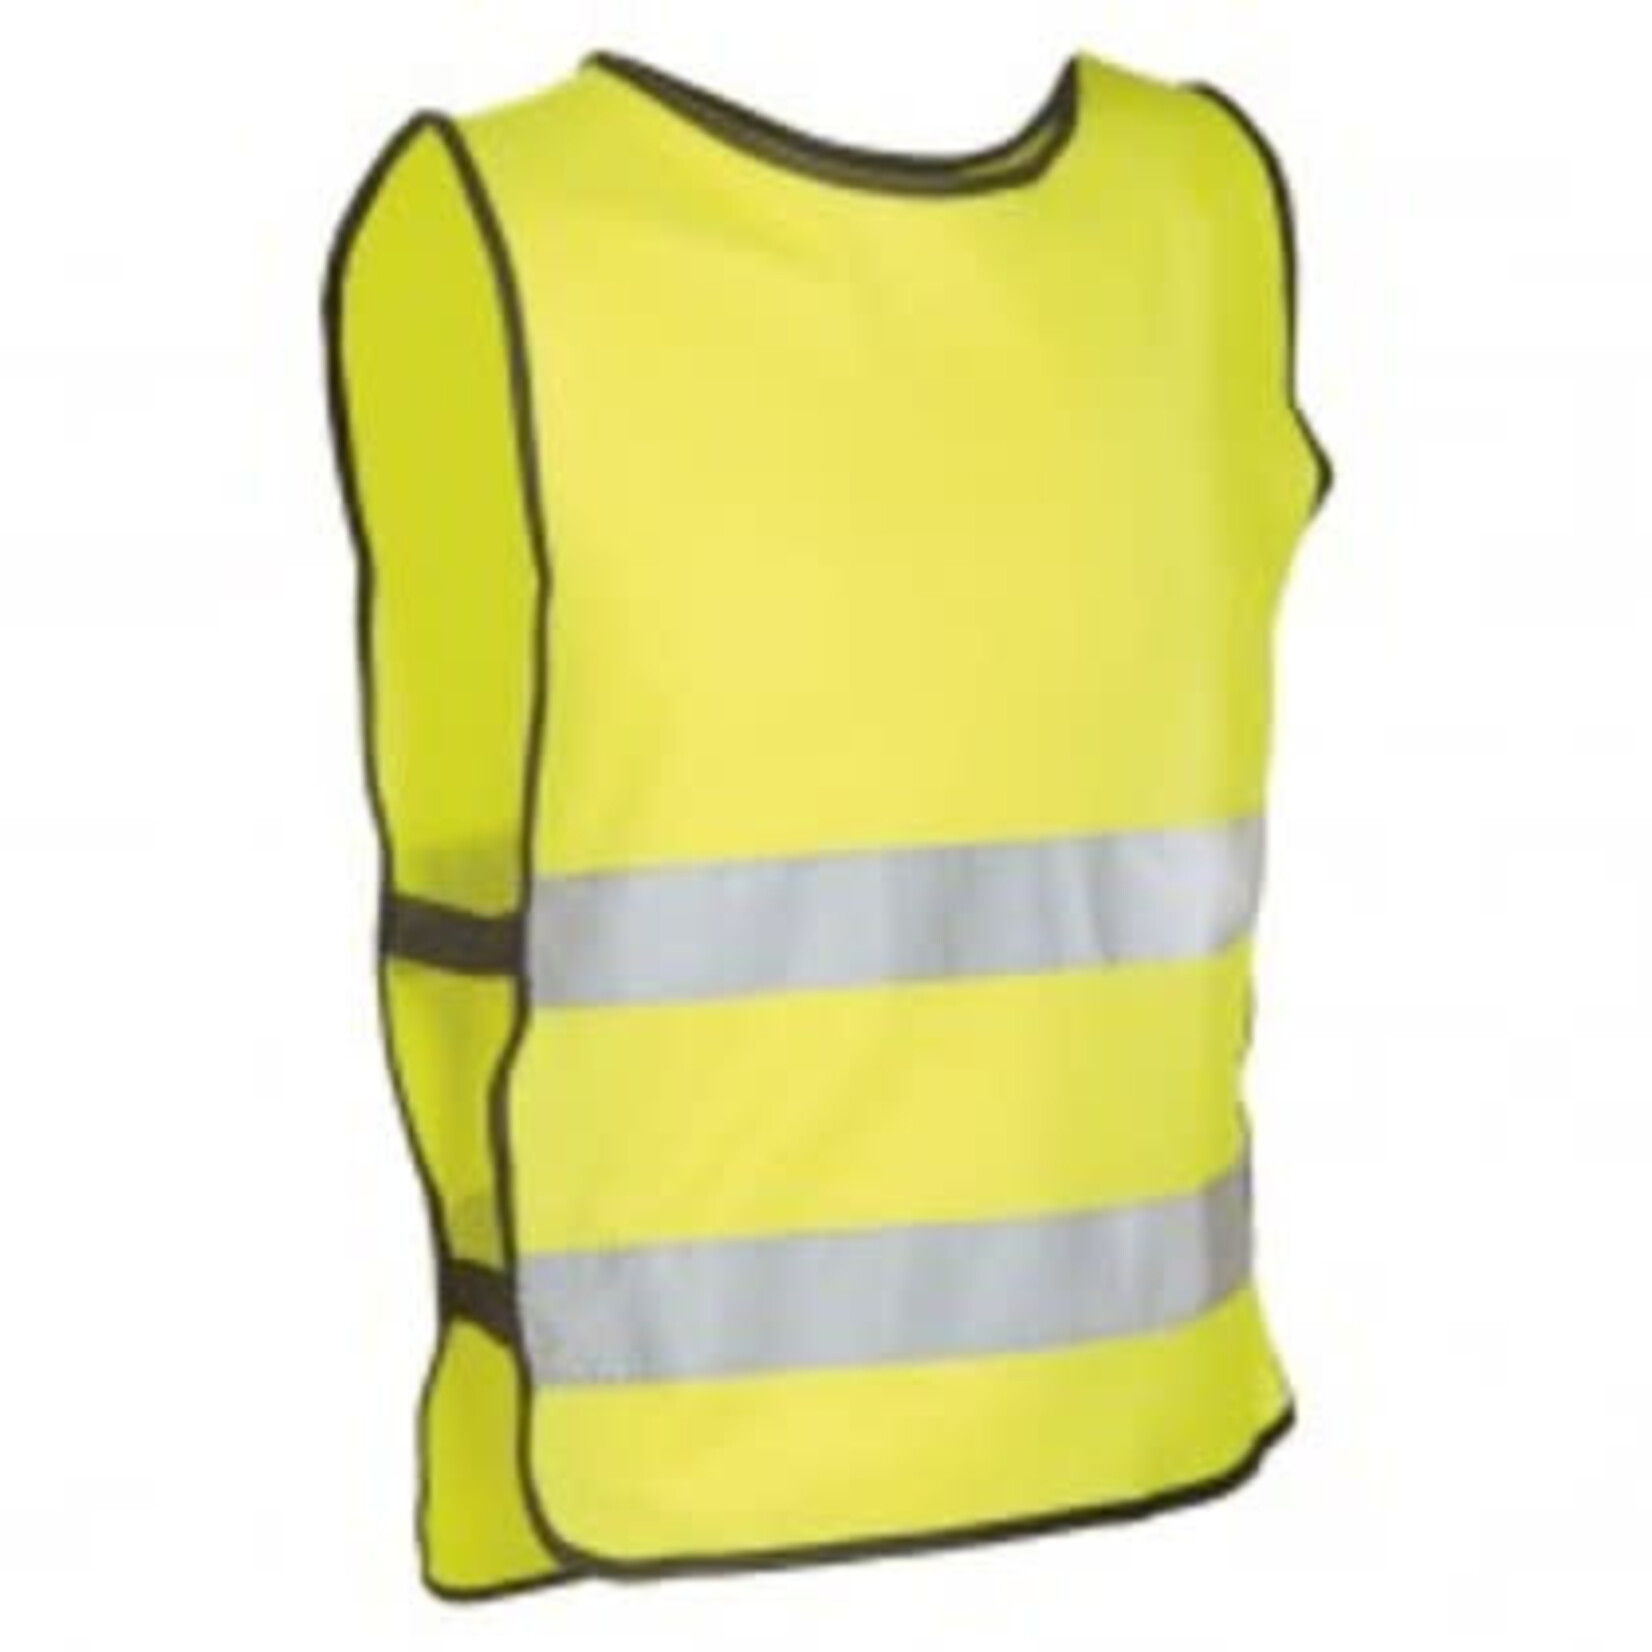 Oxford Bright Vest Packaway